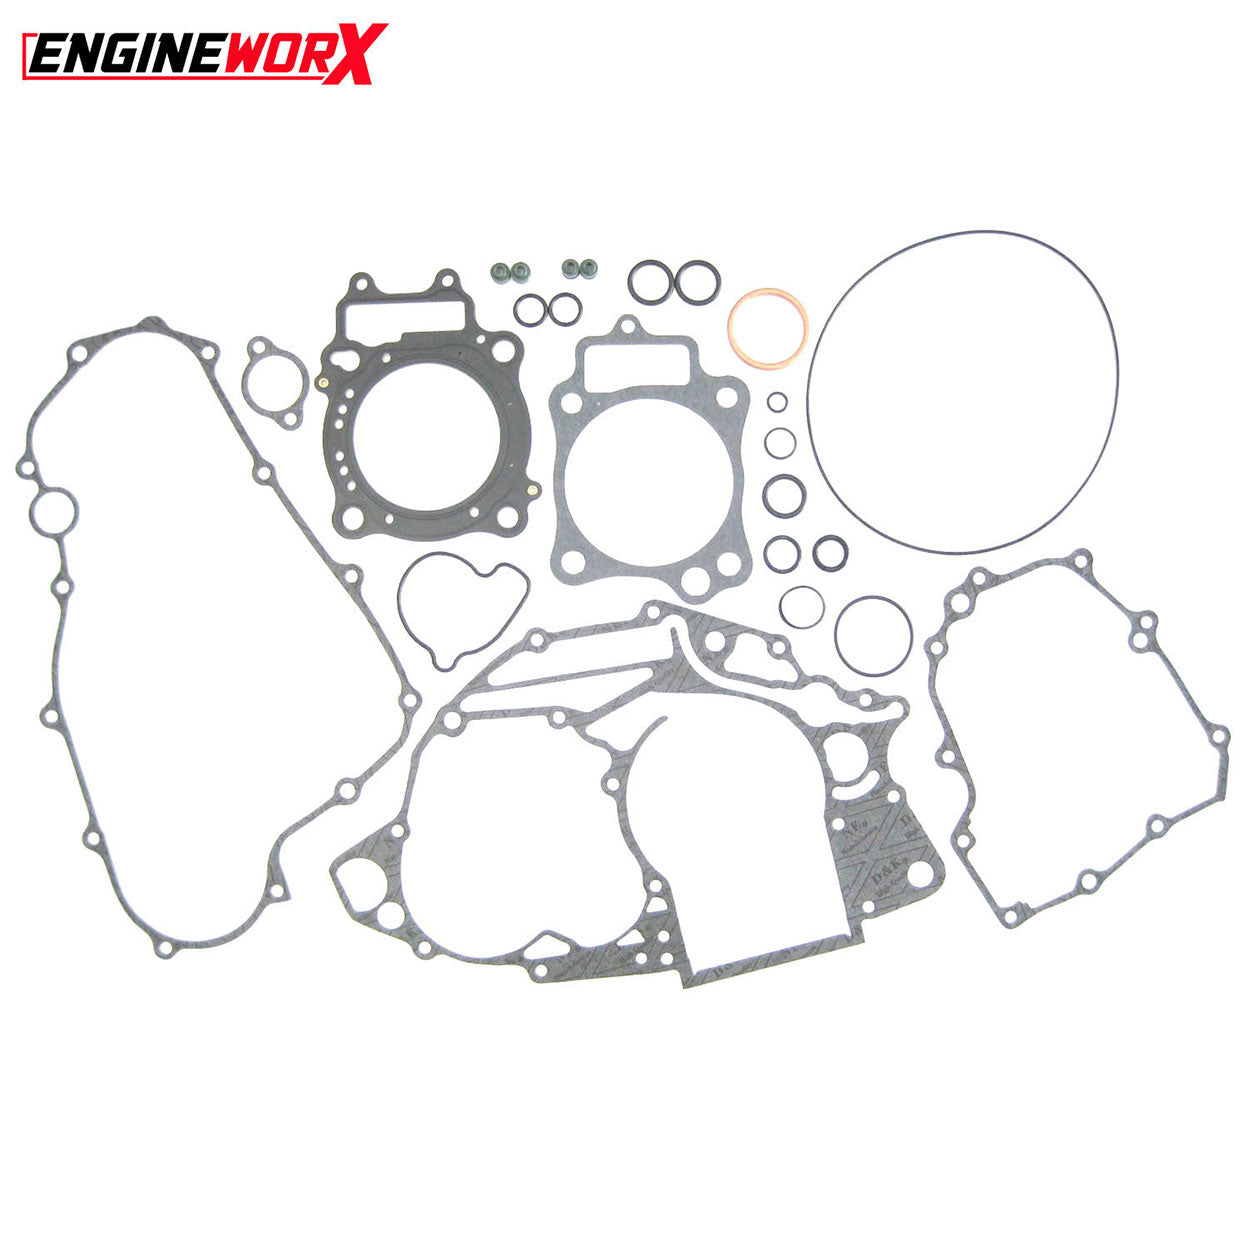 Engineworx Full Gasket Kit Honda CRF 250R 10-17